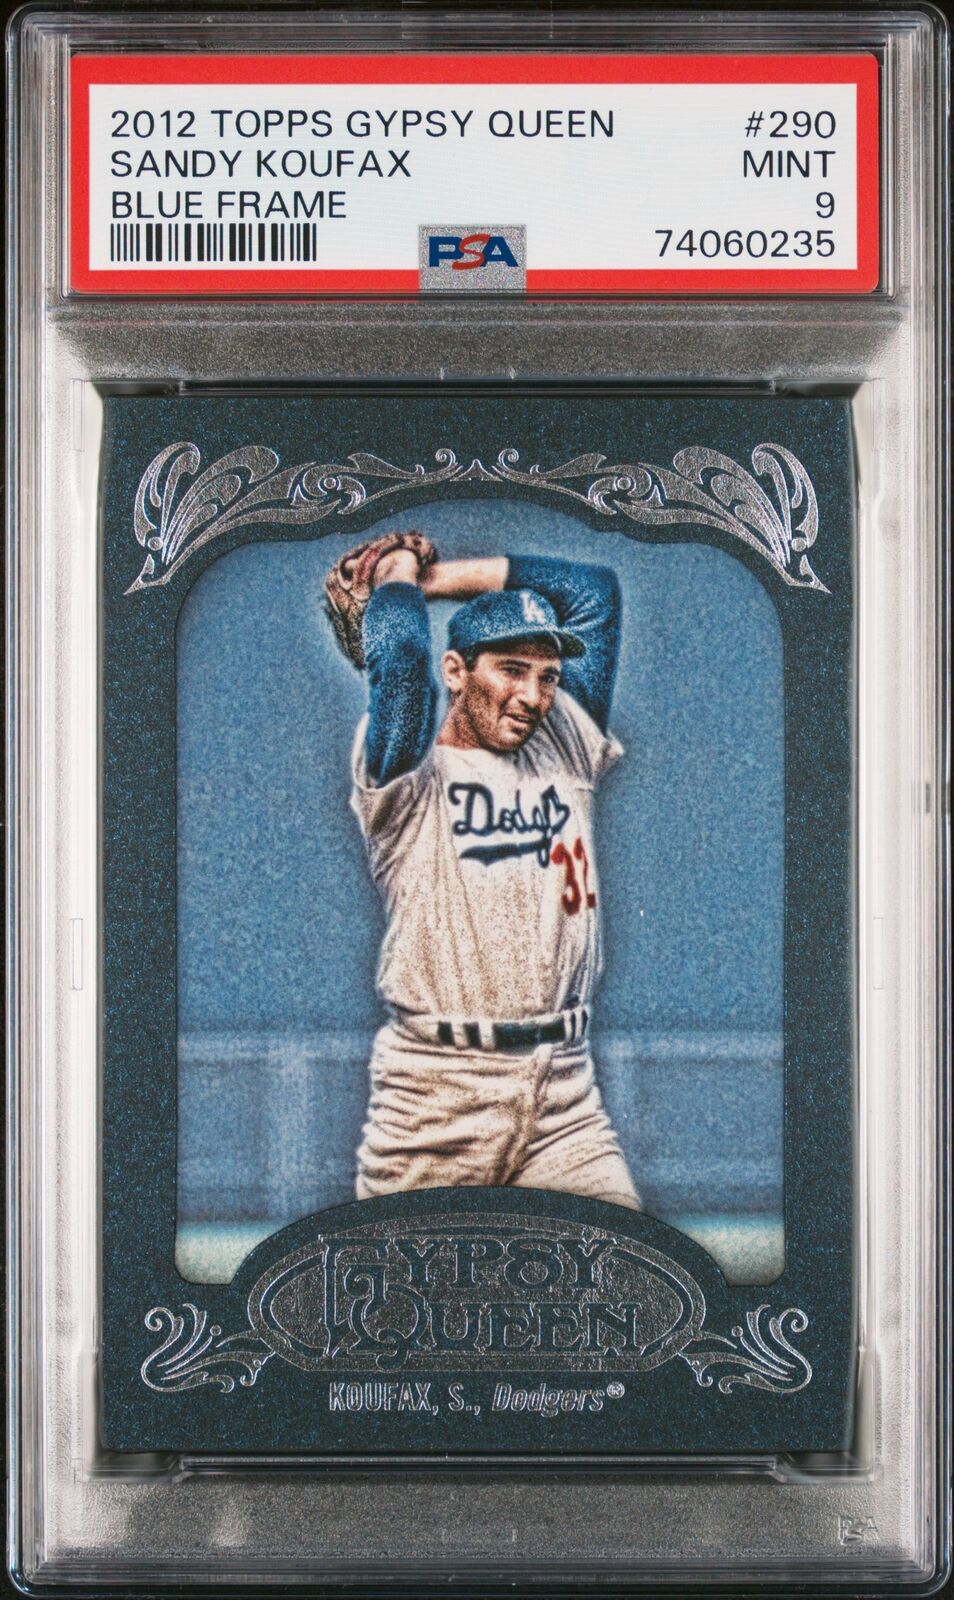 Sandy Koufax 2012 Topps Gypsy Queen Blue Frame Baseball Card #290 Graded PSA 9